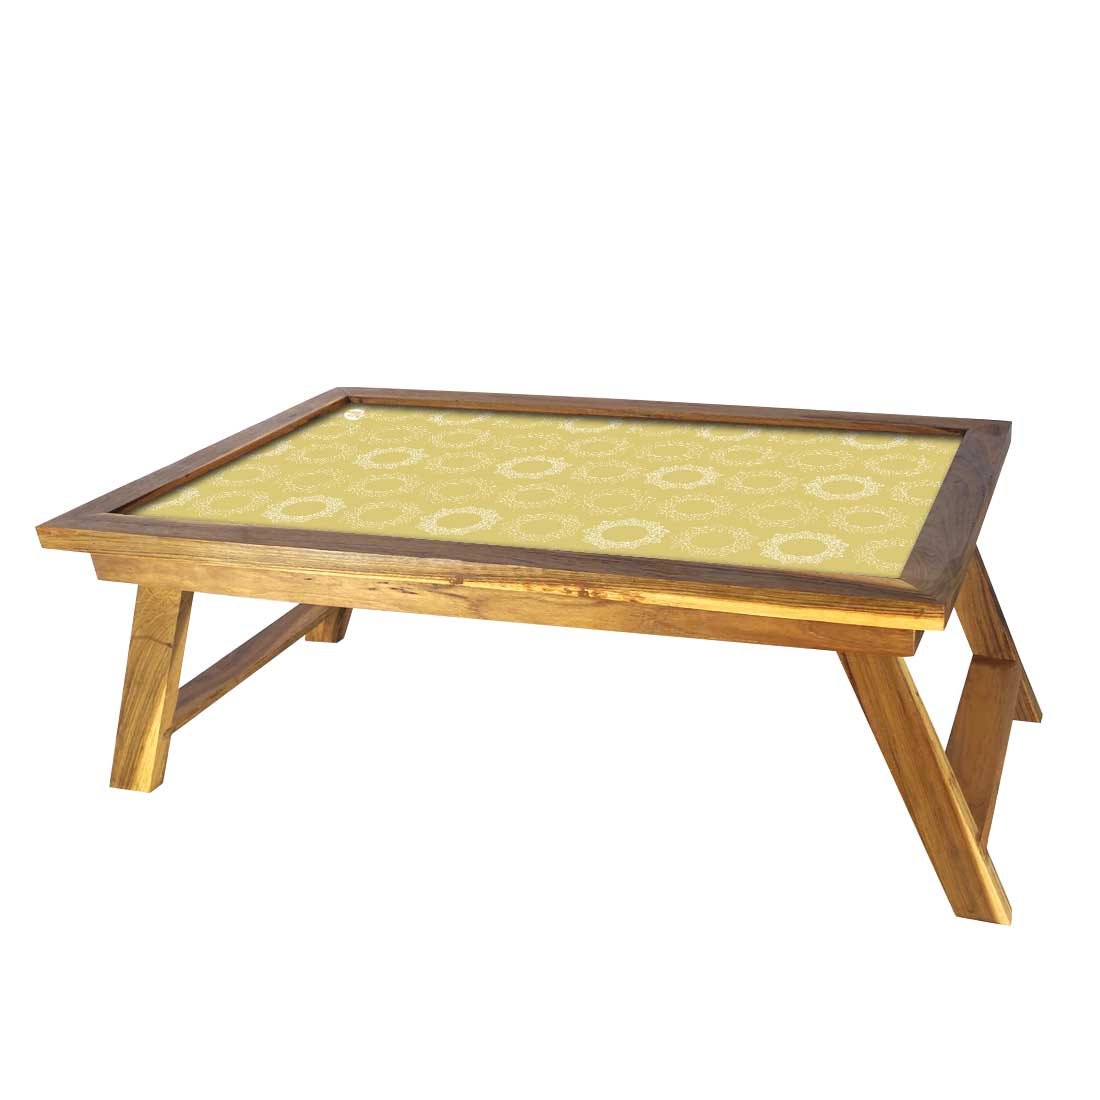 Nutcase Folding Laptop Table For Home Bed Lapdesk Breakfast Table Foldable Teak Wooden Study Desk - Beautiful Designer Pattern Nutcase